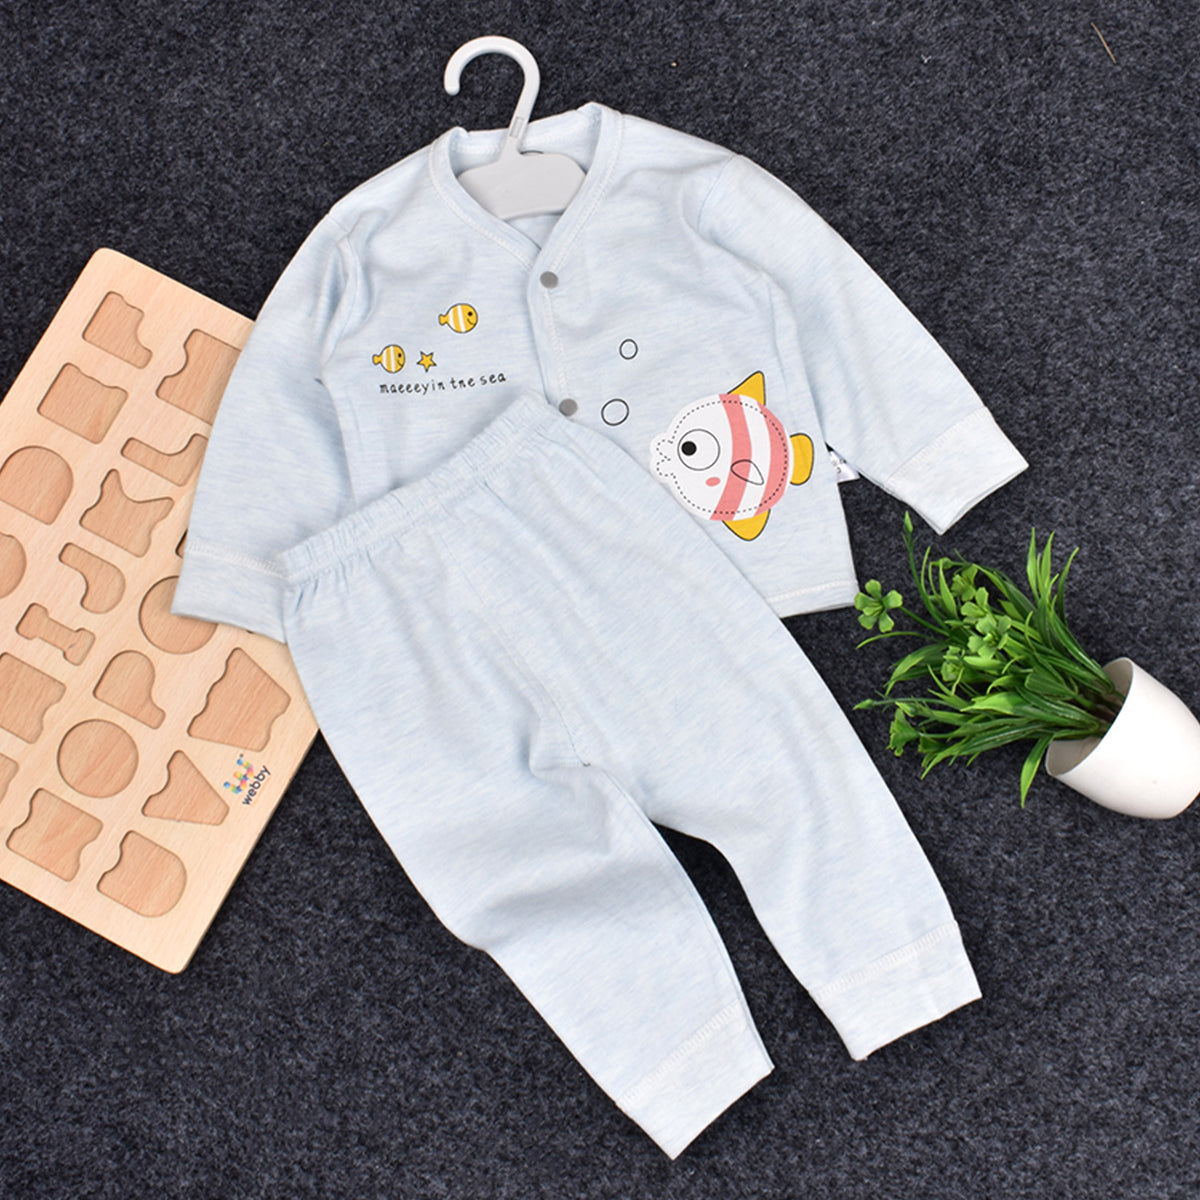 Baby's Warm Unisex Cotton Suit Set - 1 Pajama and 1 Shirt - Blue